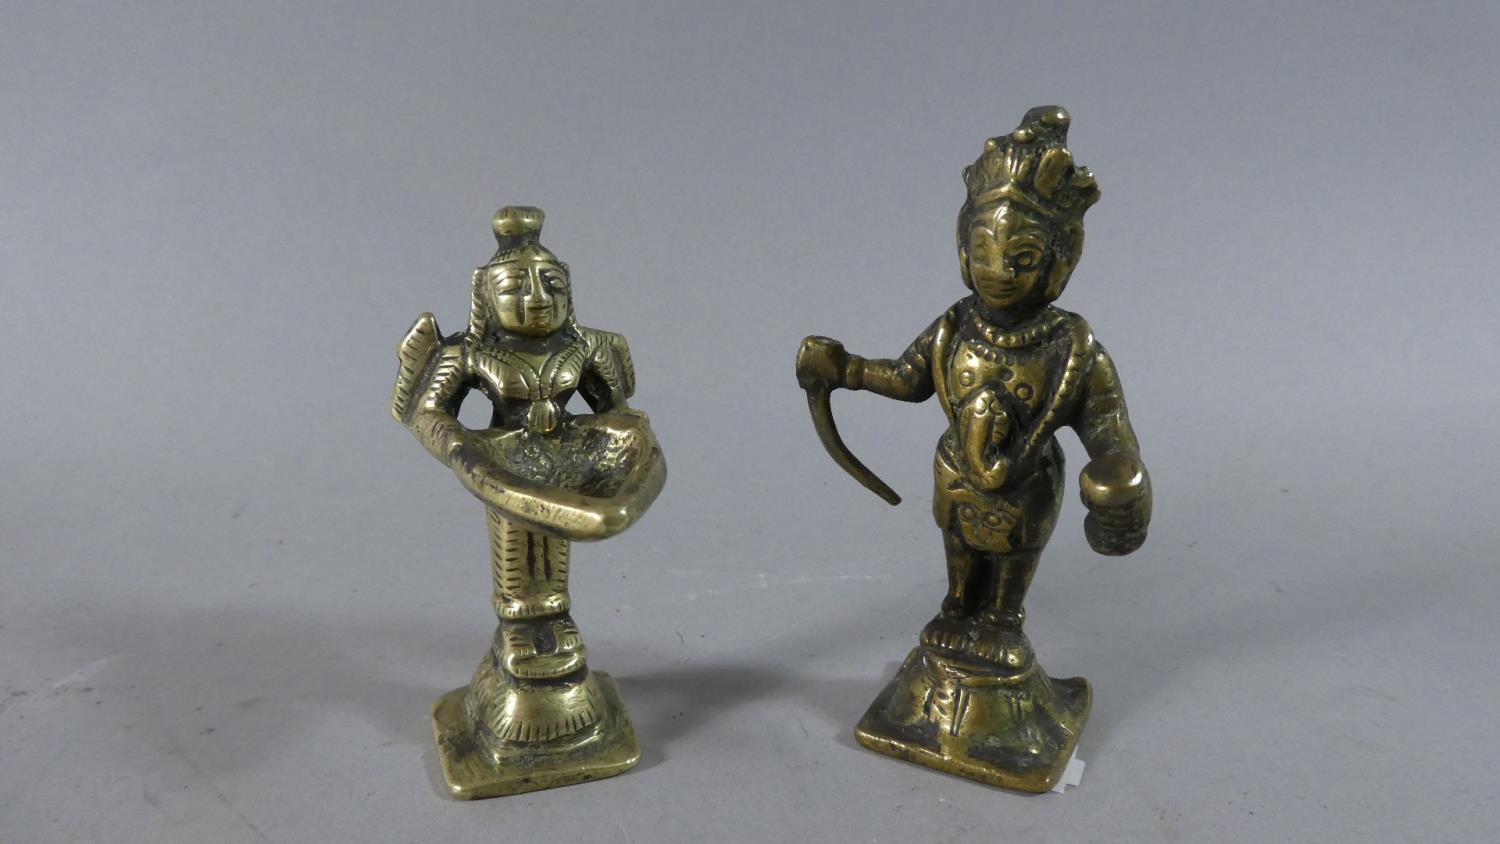 A Pair of Indian Brass Hindu Temple Figures, 10cm High